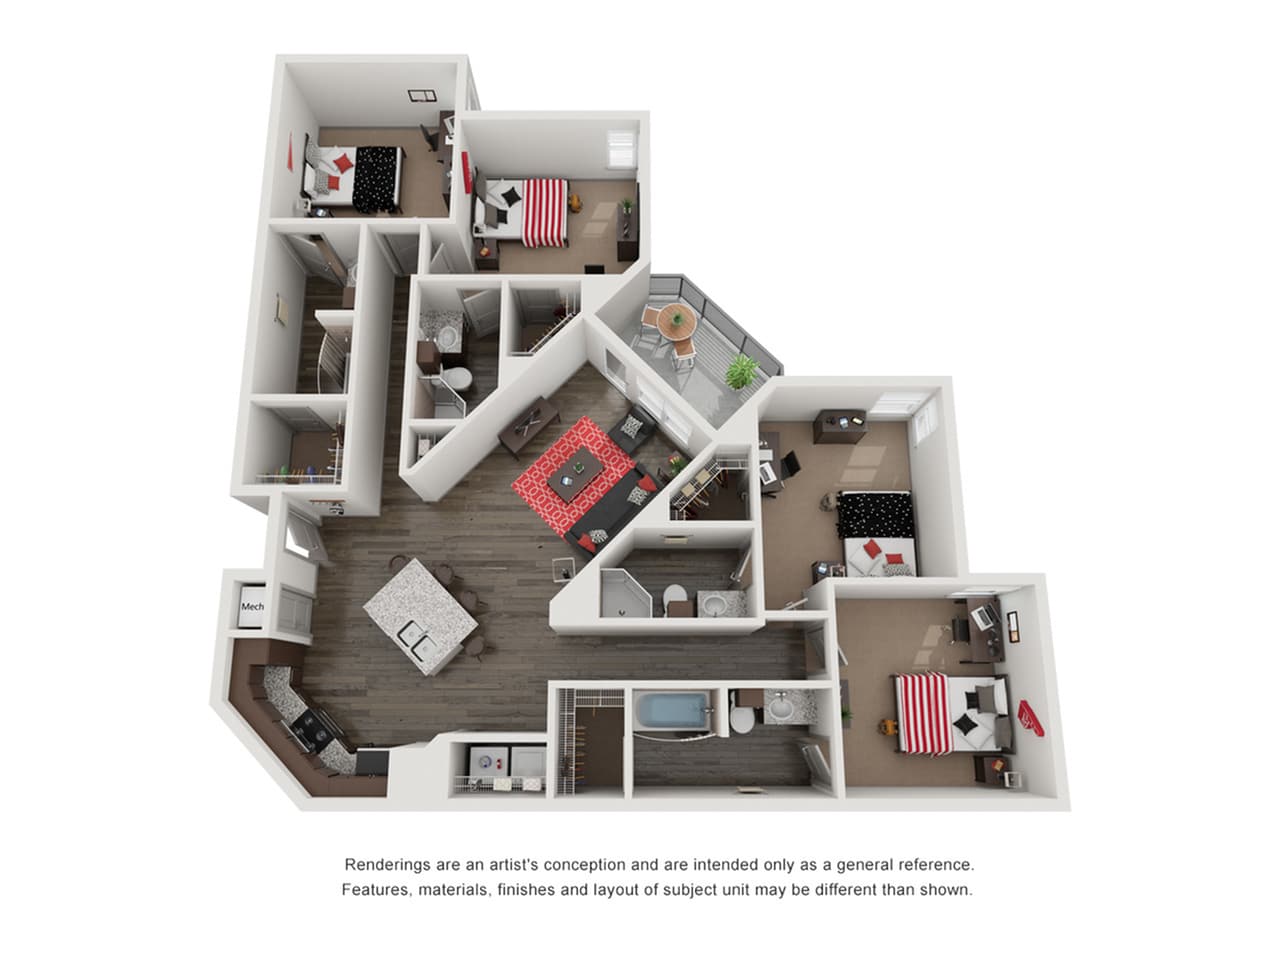 ou apartment floor plan